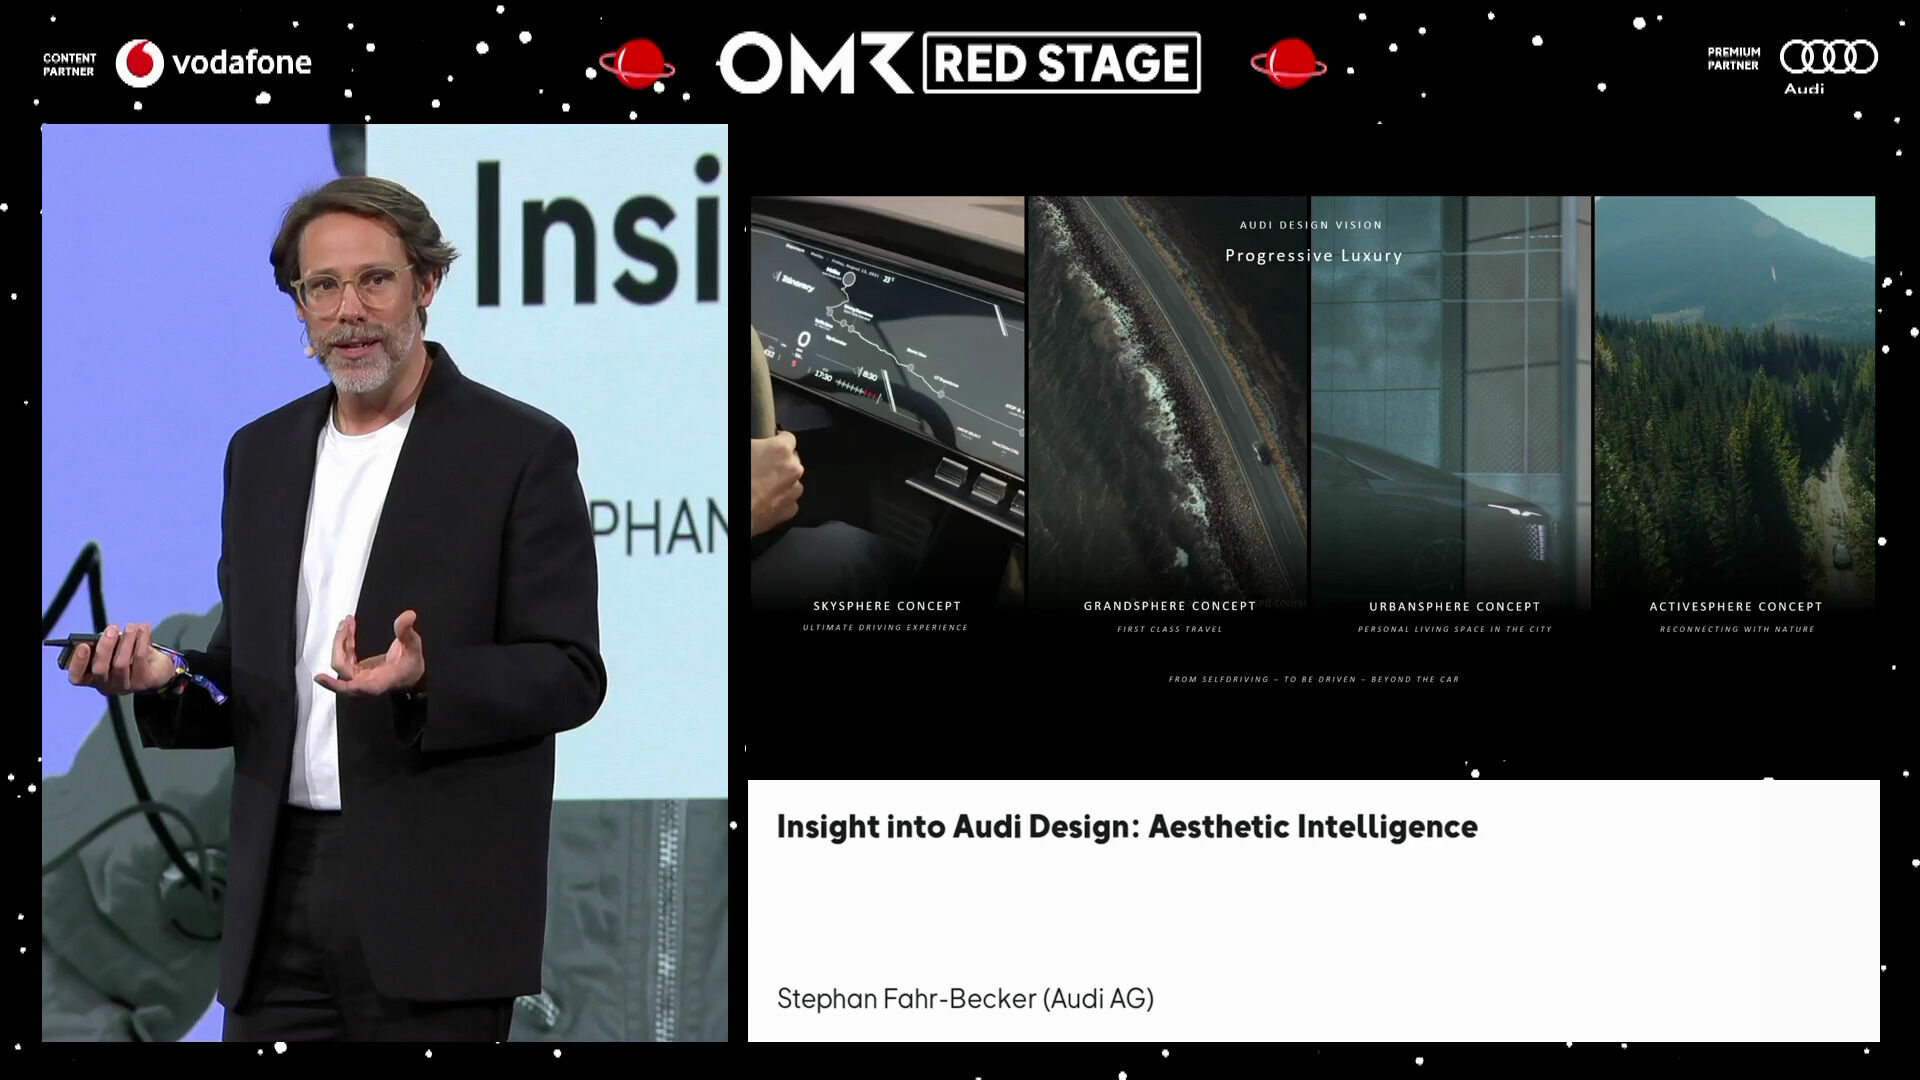 Audi x OMR – Insights into Audi Design: Aesthetic Intelligence